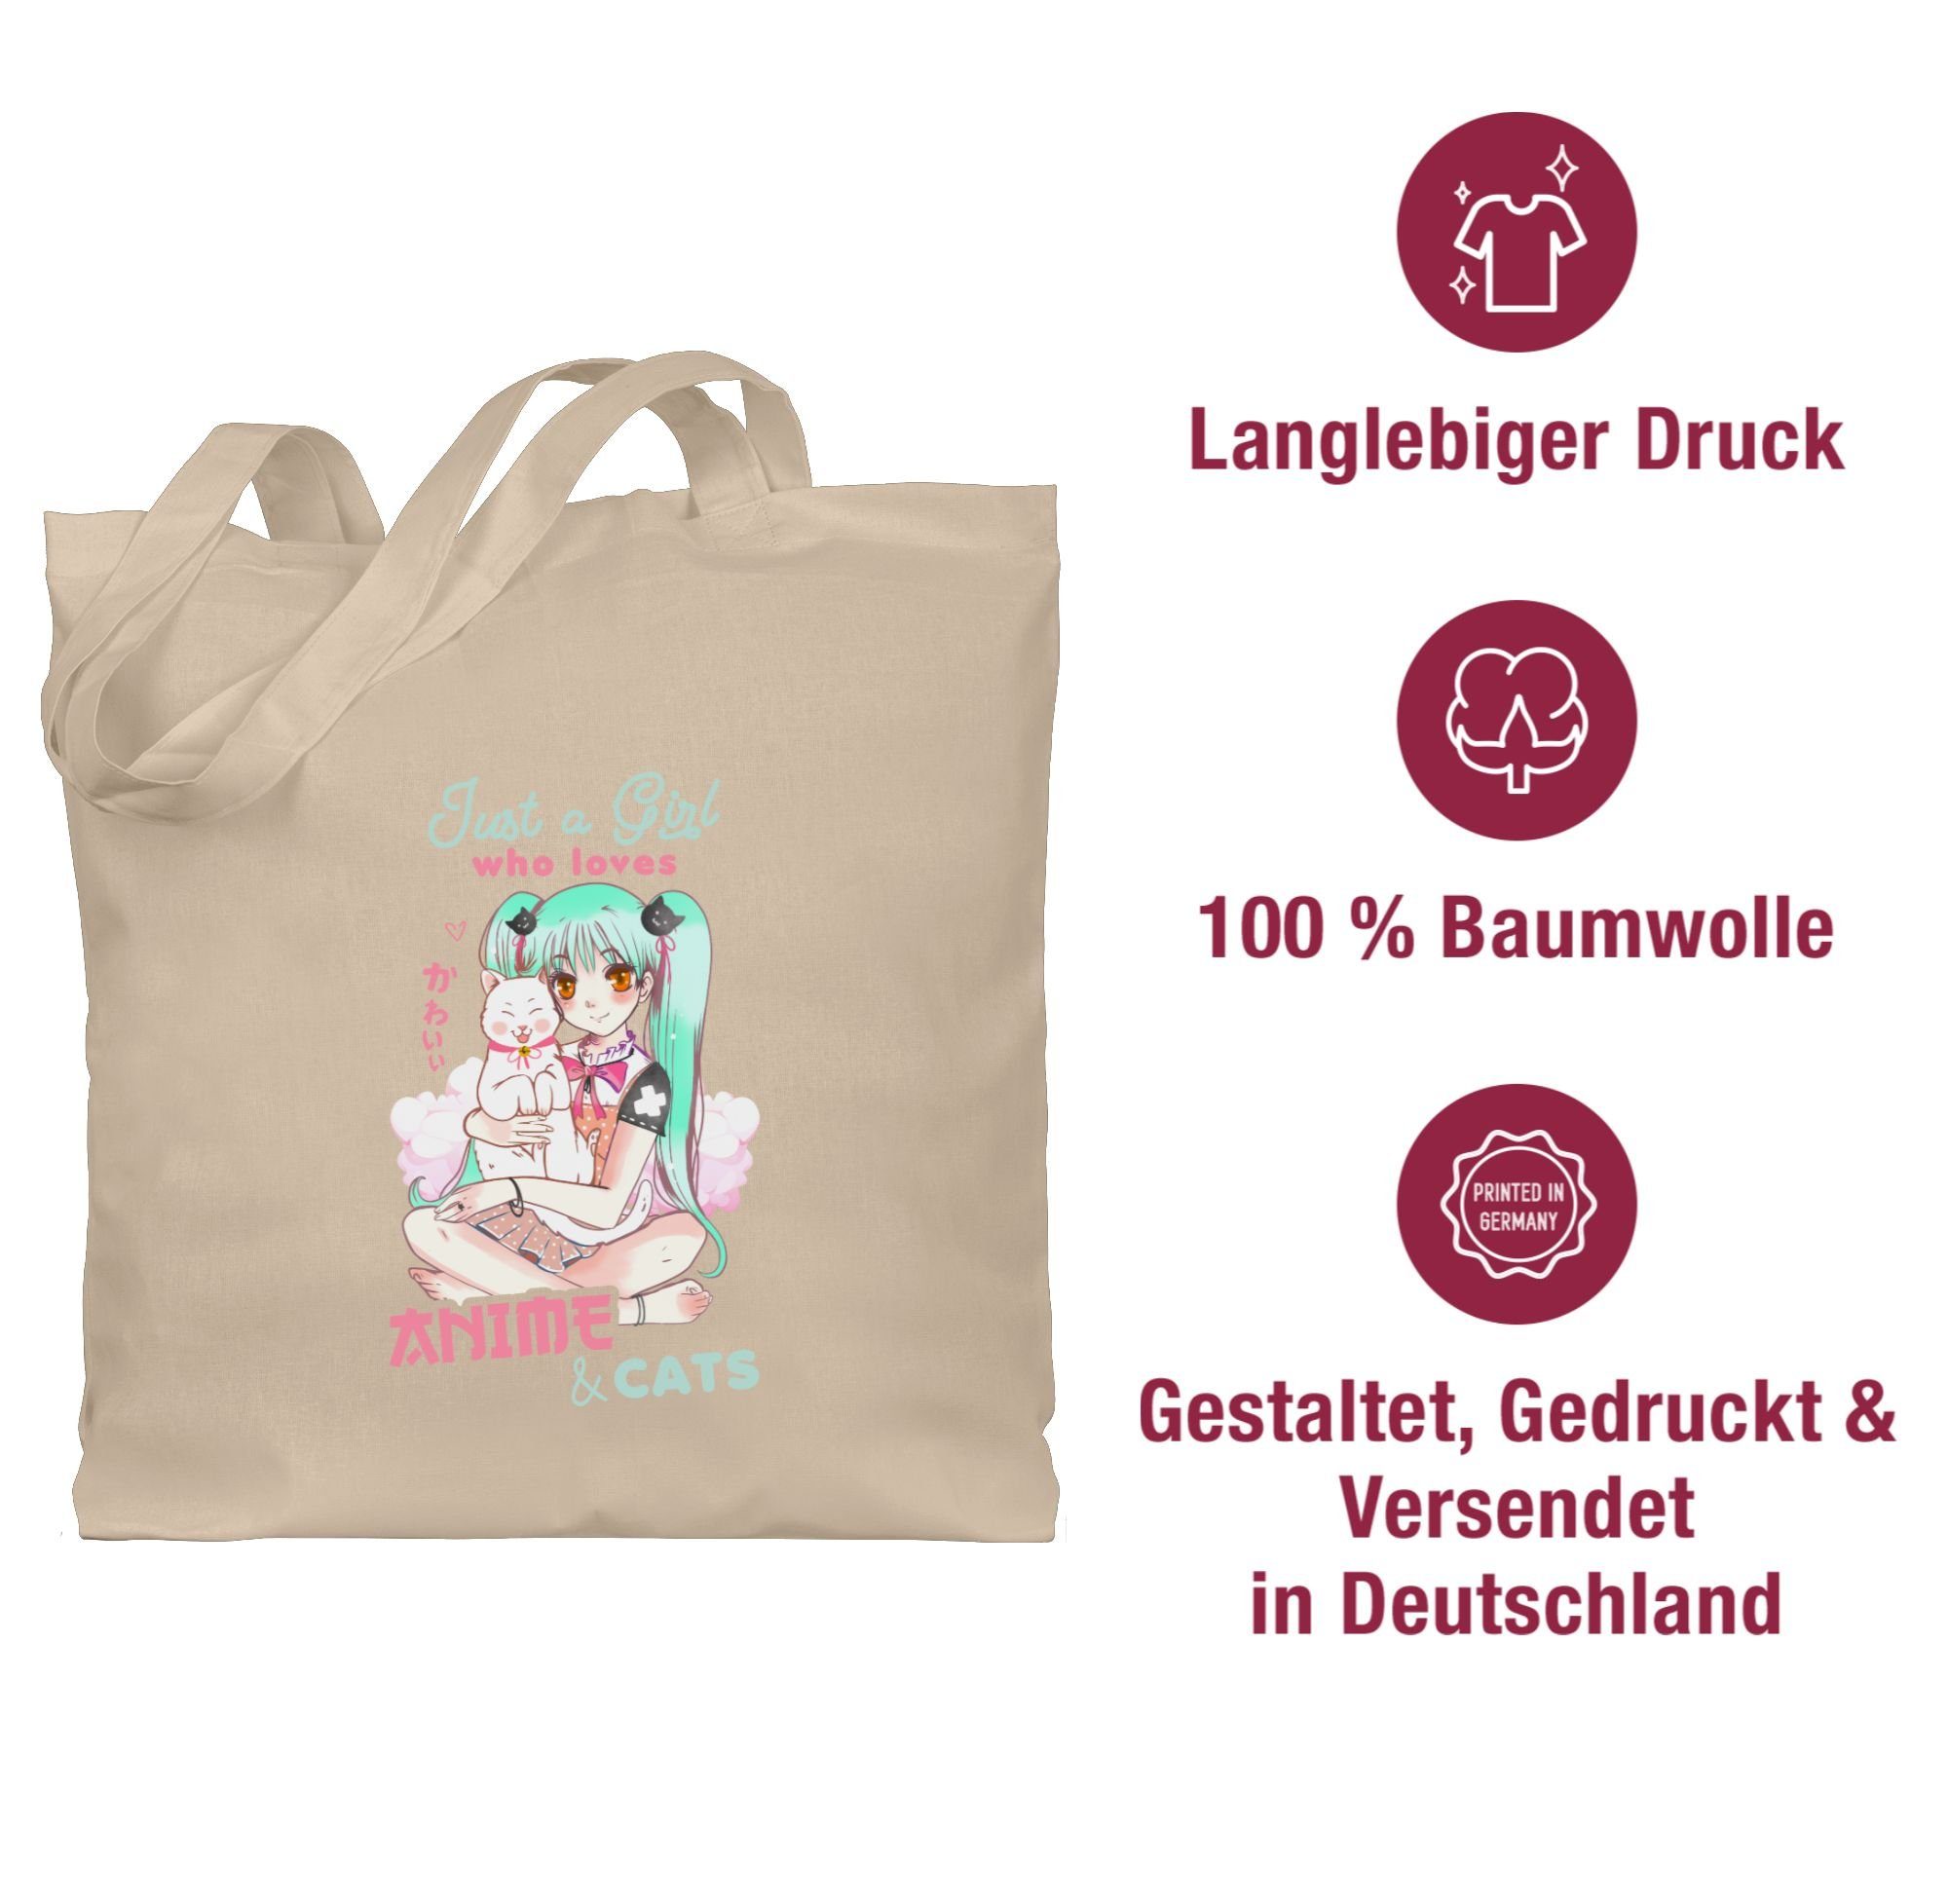 Shirtracer Umhängetasche Just a girl 2 cats, Anime loves anime who Geschenke & Naturweiß